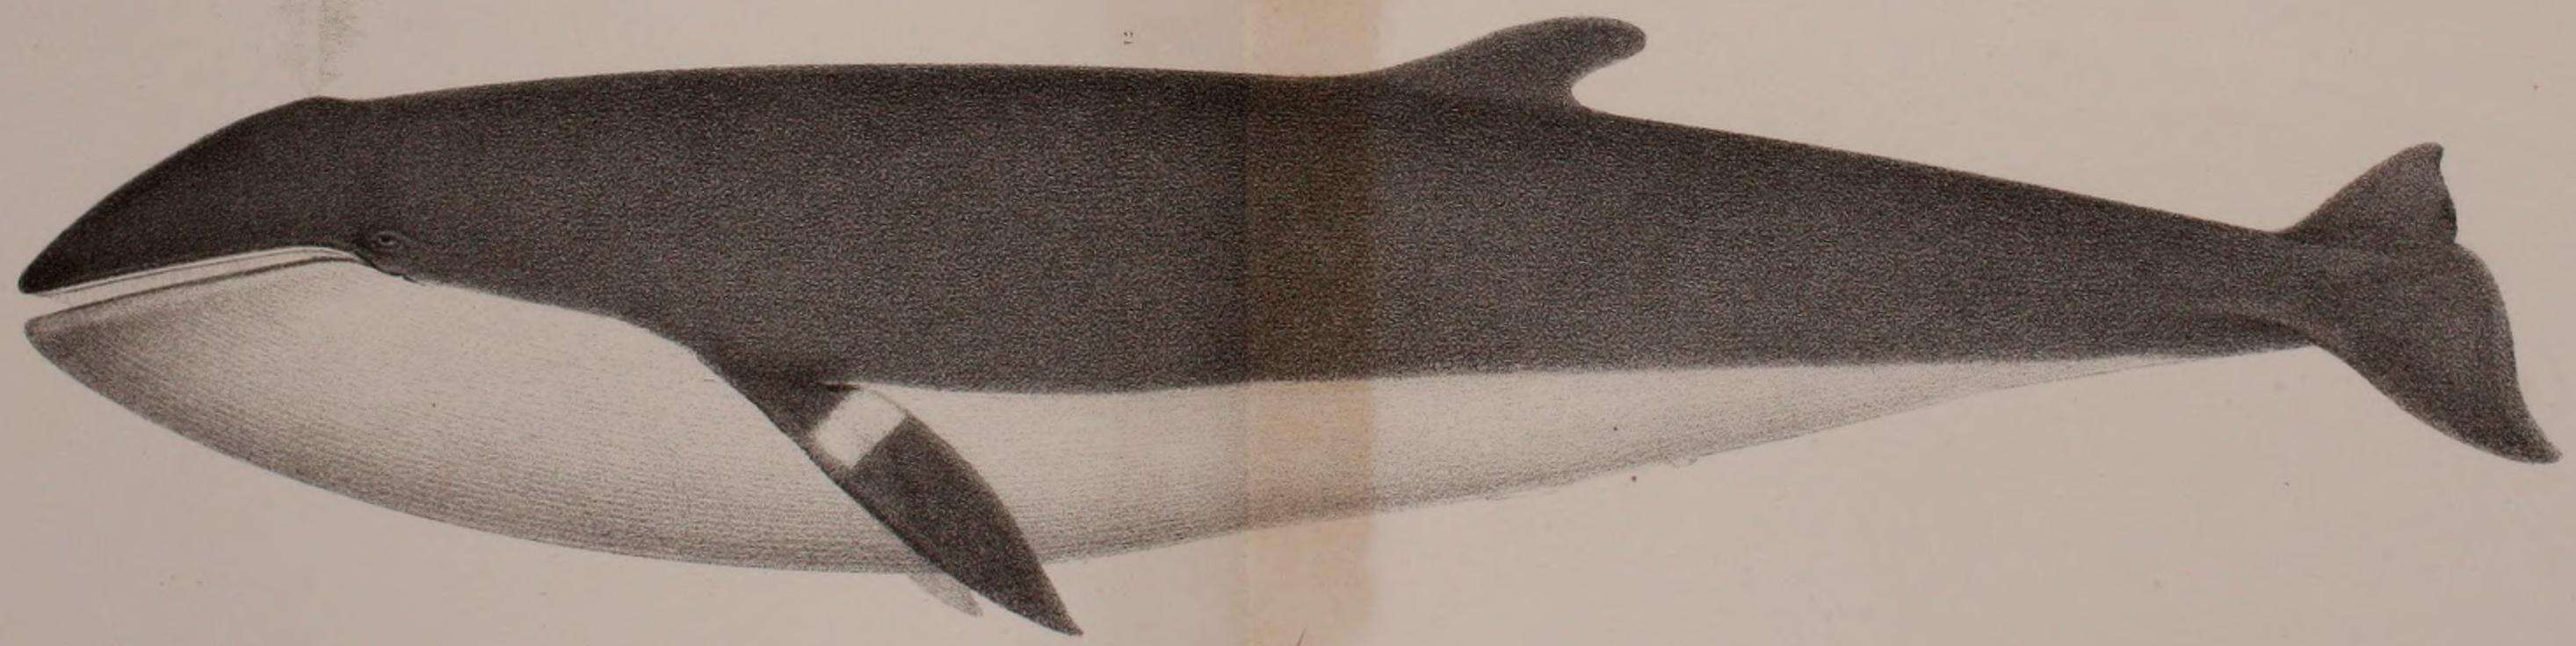 Image de Baleinoptère à museau pointu